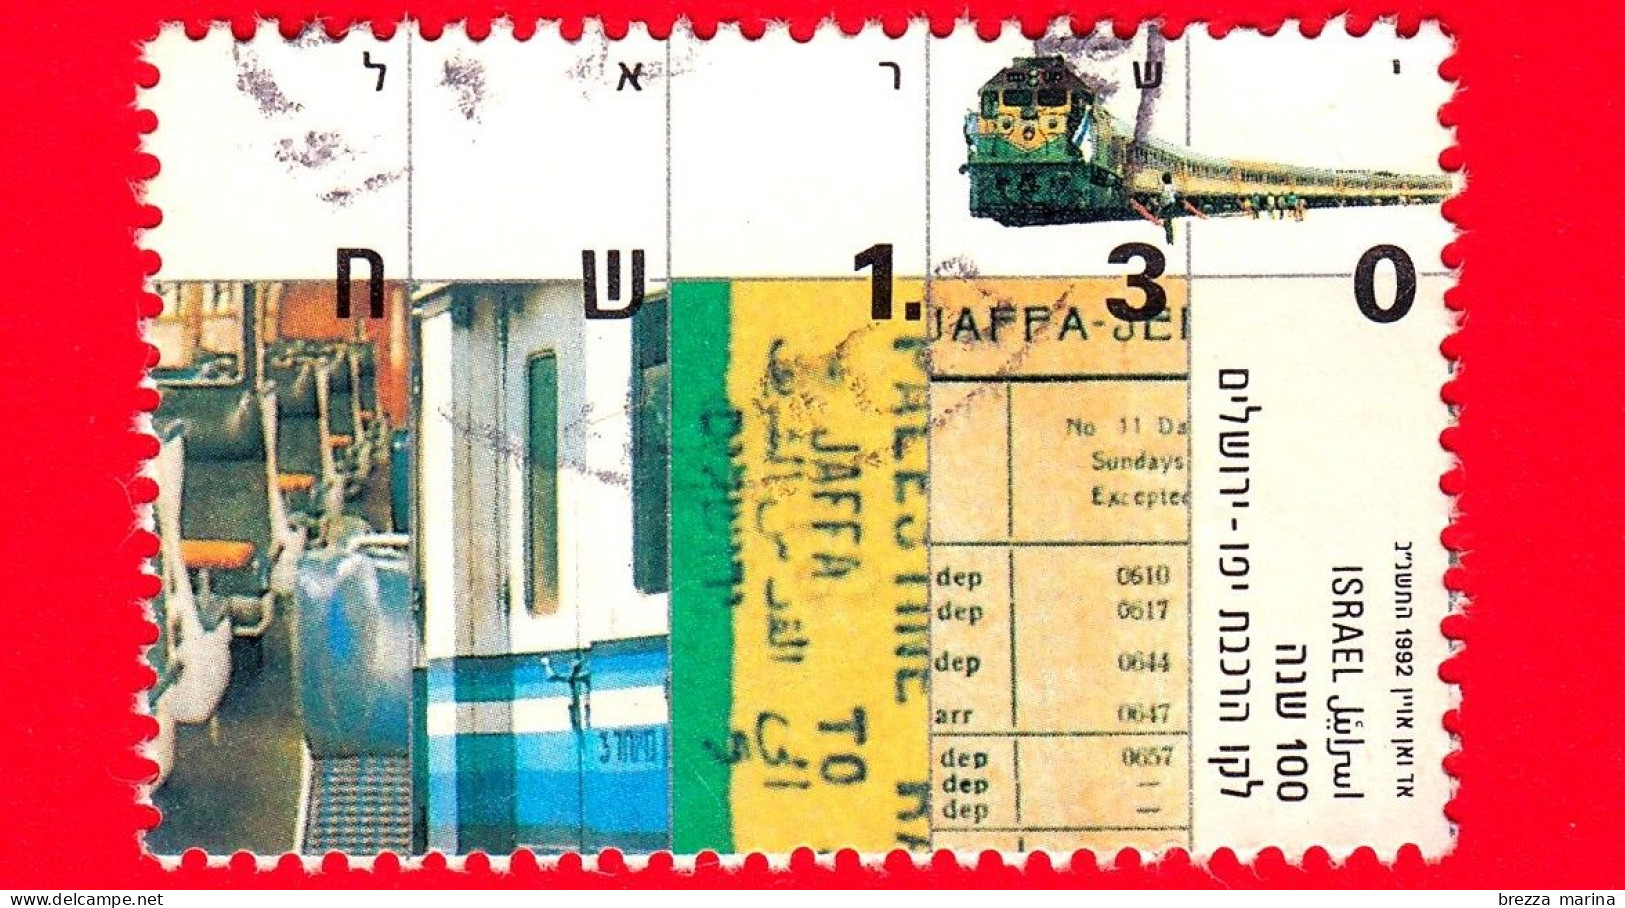 ISRAELE - Usato - 1992 - Centenario Della Linea Ferroviaria Jaffa-Gerusalemme - Locomotiva Diesel - 1.30 - Gebraucht (ohne Tabs)